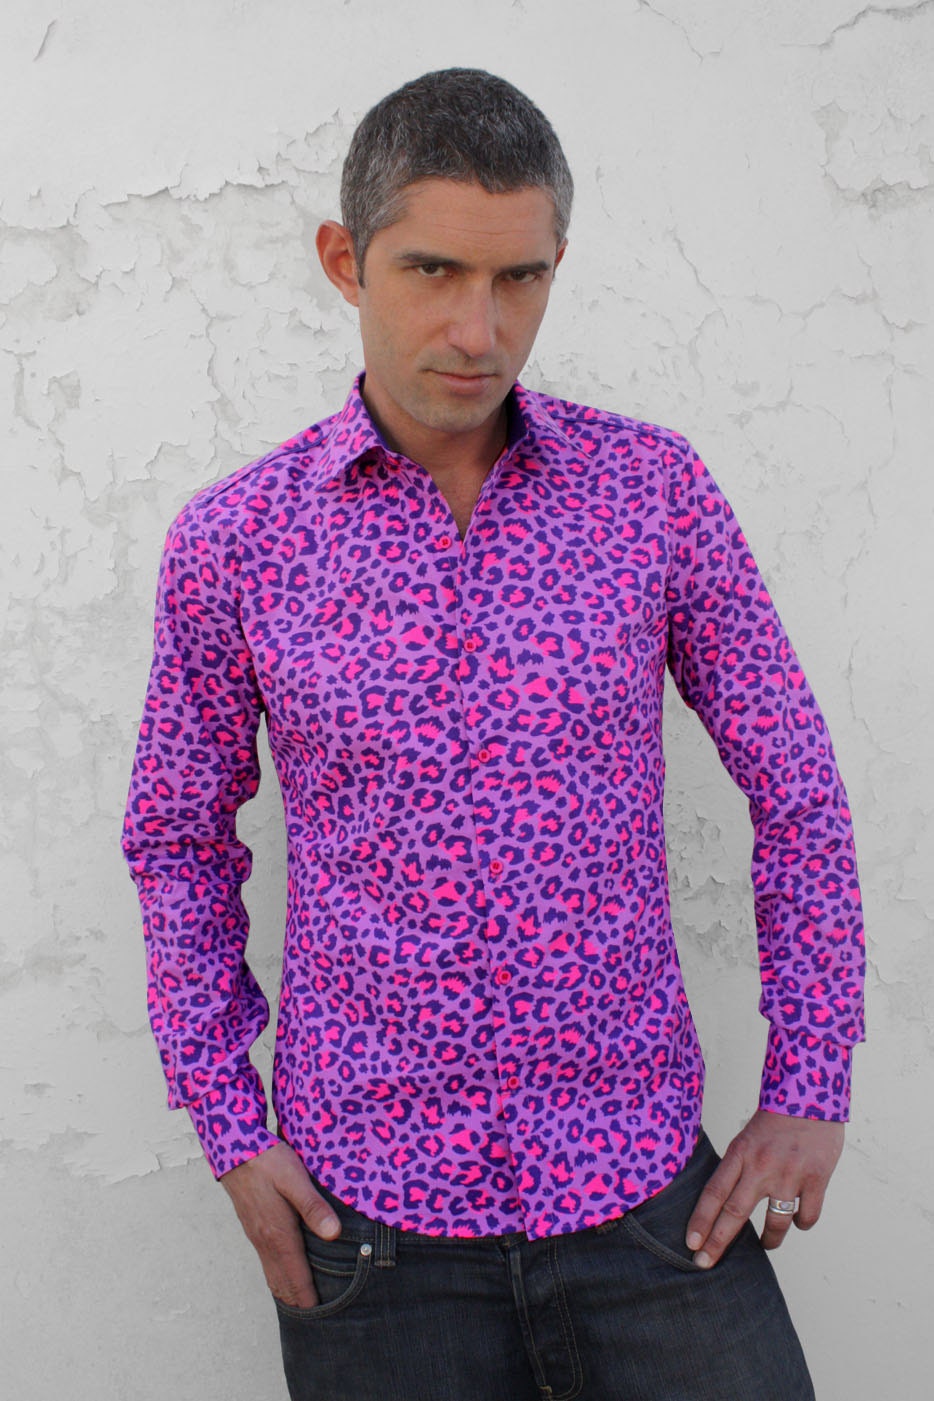 Leopard print shirt for men Pink Leopard BAÃSAP S size